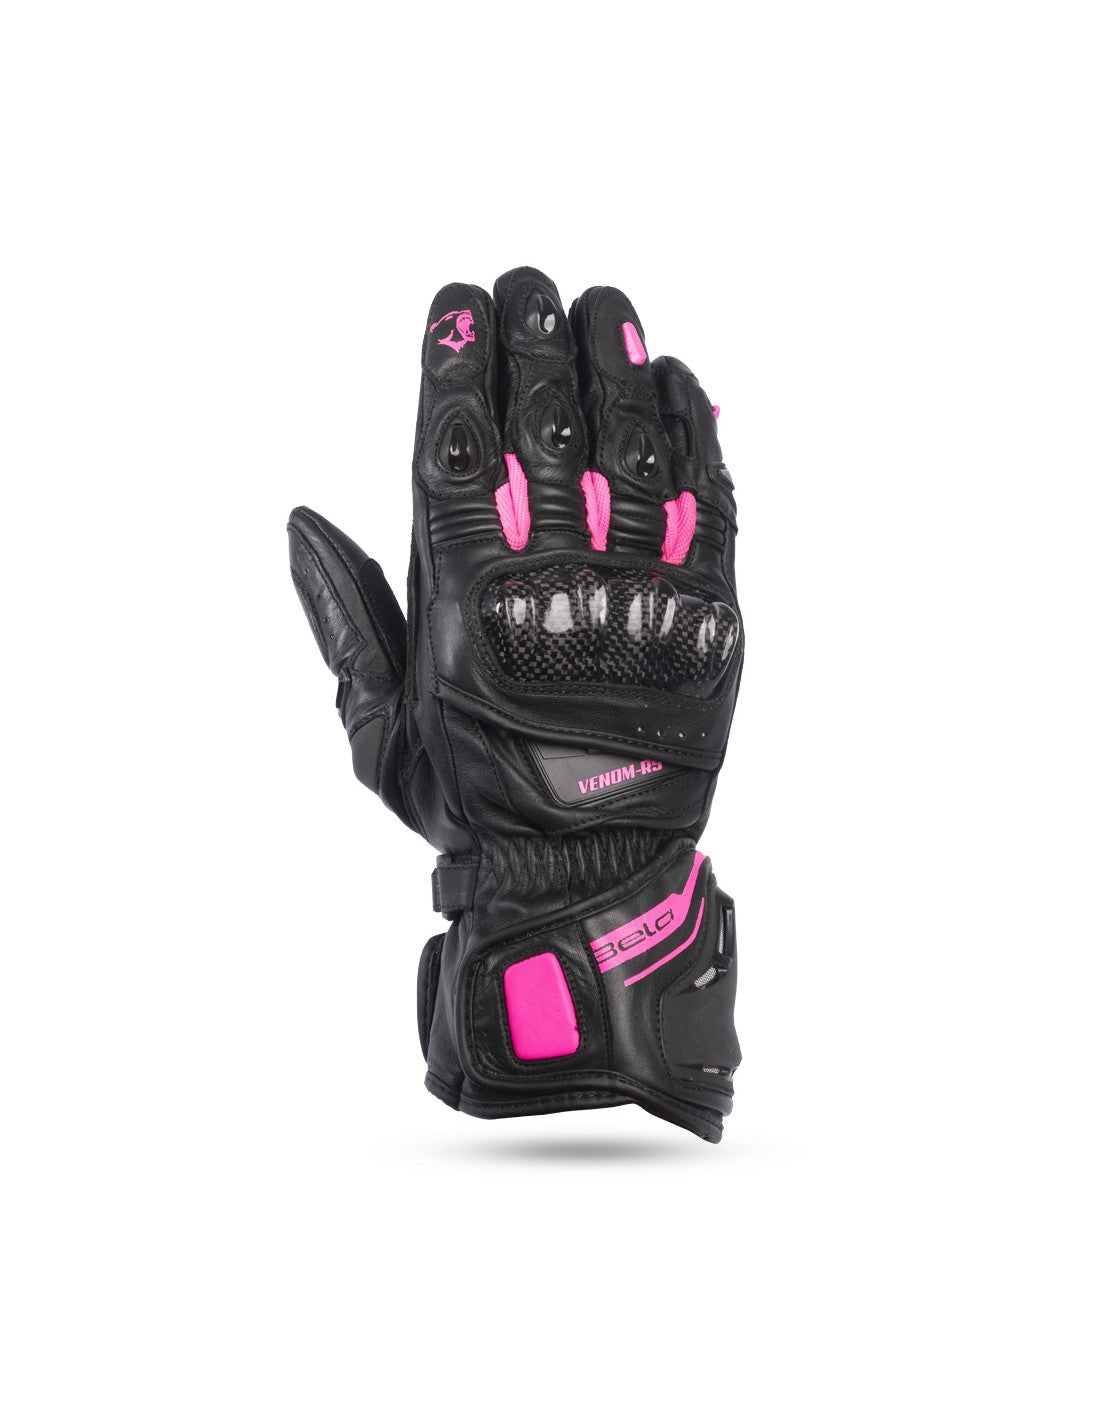 bela venom rs racing lady black and pink gloves back side view